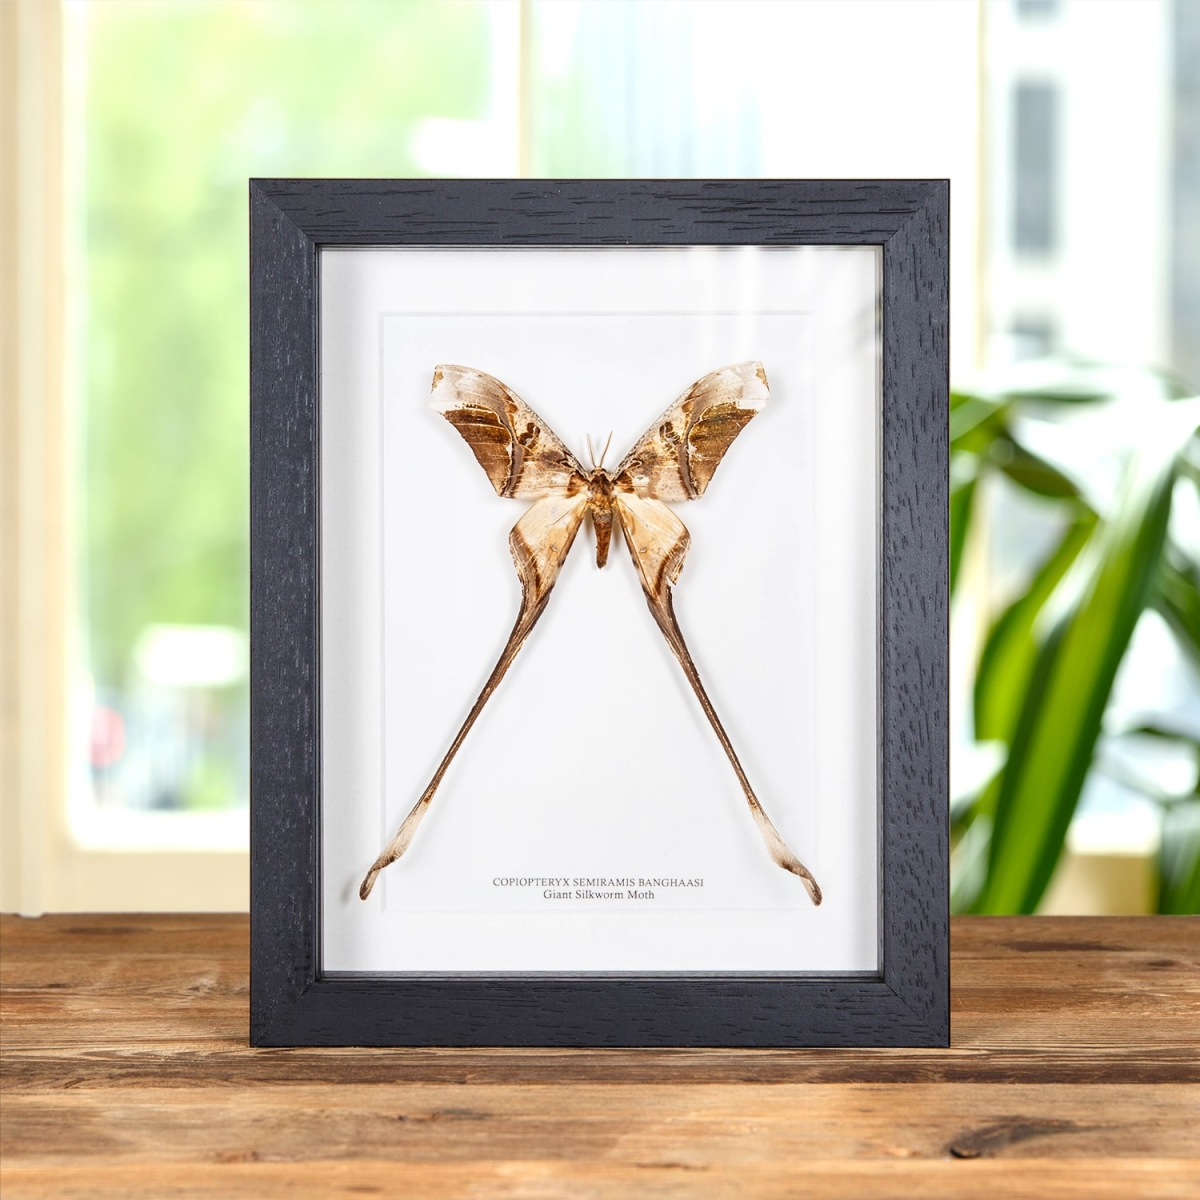 Minibeast Giant Silkworm Moth In Box Frame (Copiopteryx semiramis banghaasi)